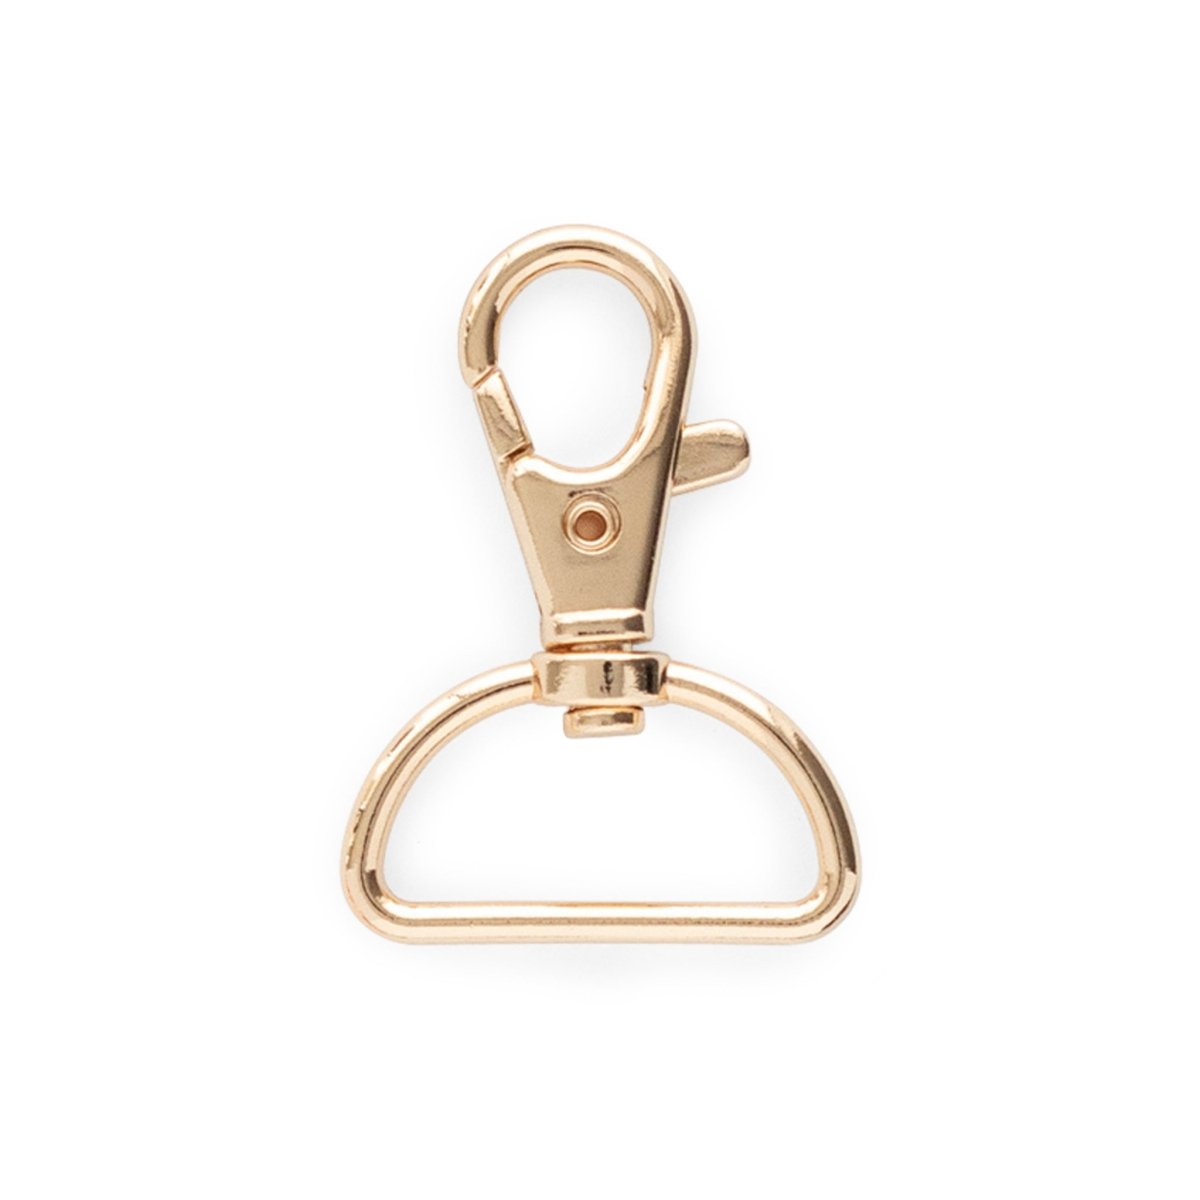 Lanyards Premium Lanyard Clip - Large Hook Soft Gold from Cara & Co Craft Supply